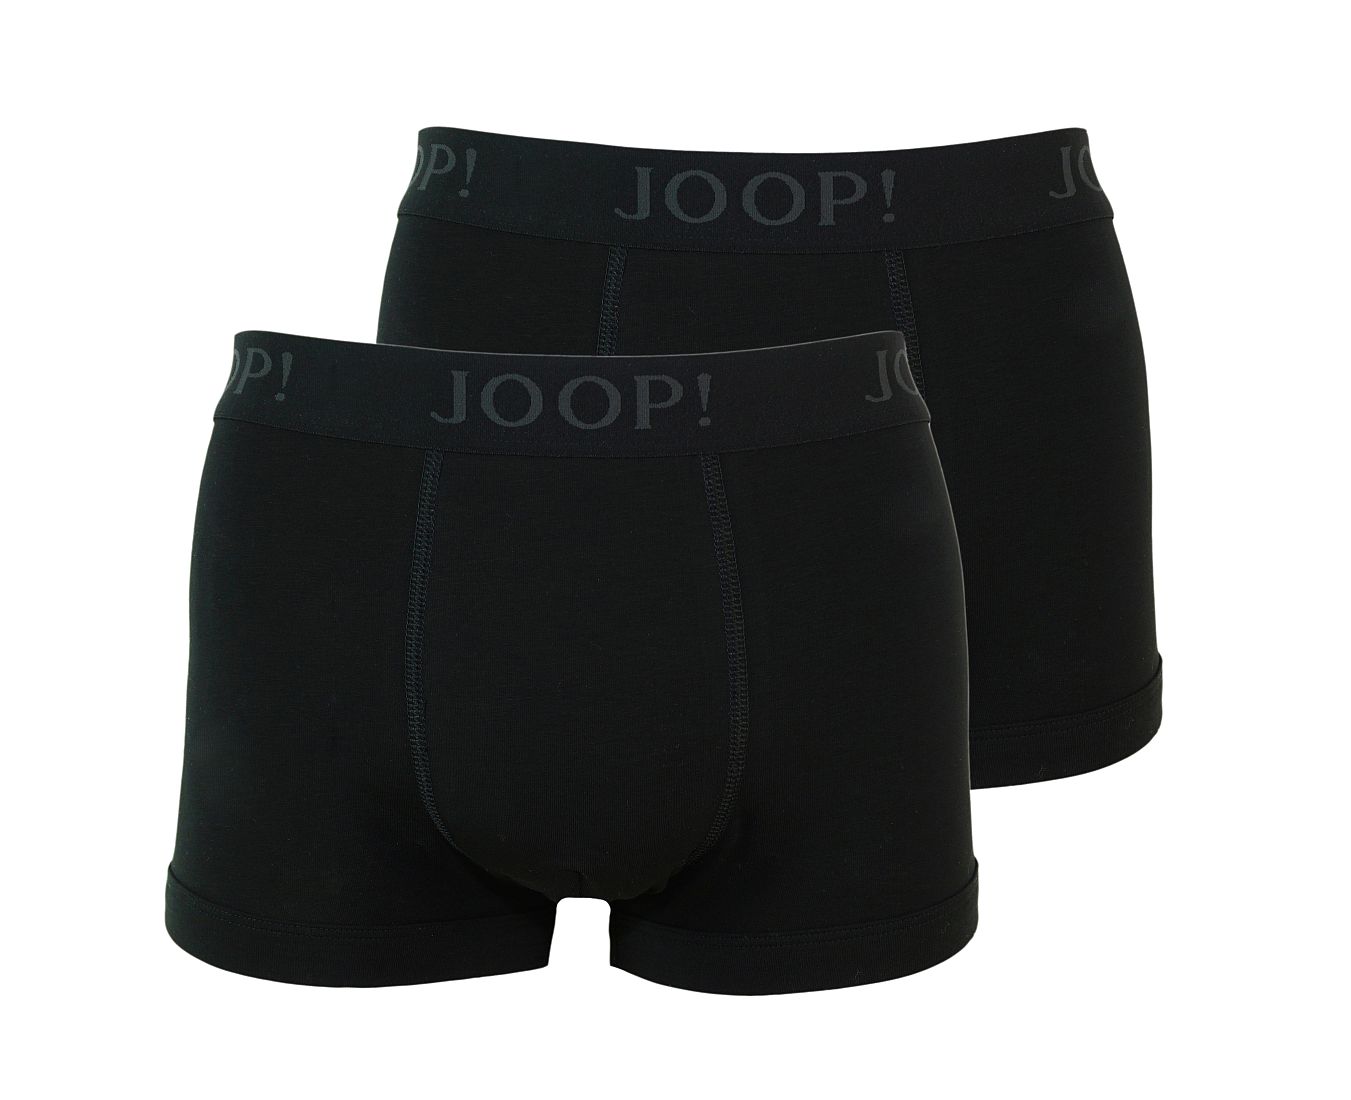 JOOP! Trunks Shorts 2er Pack 10001475 001 schwarz S17-JPST1